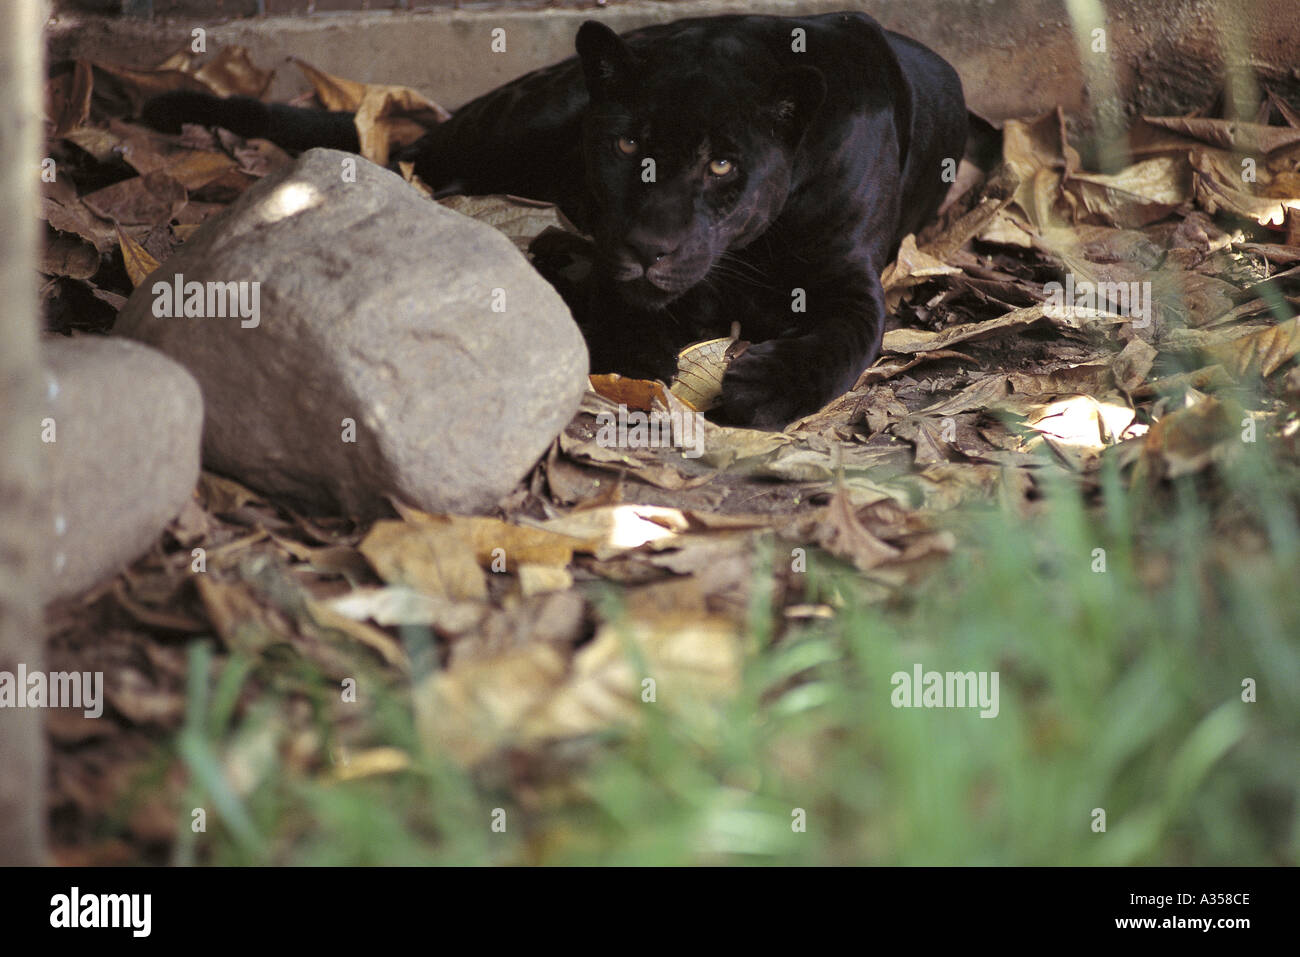 Amazon Brazil Black Jaguar Onca Panthera onca also known as black panther Stock Photo